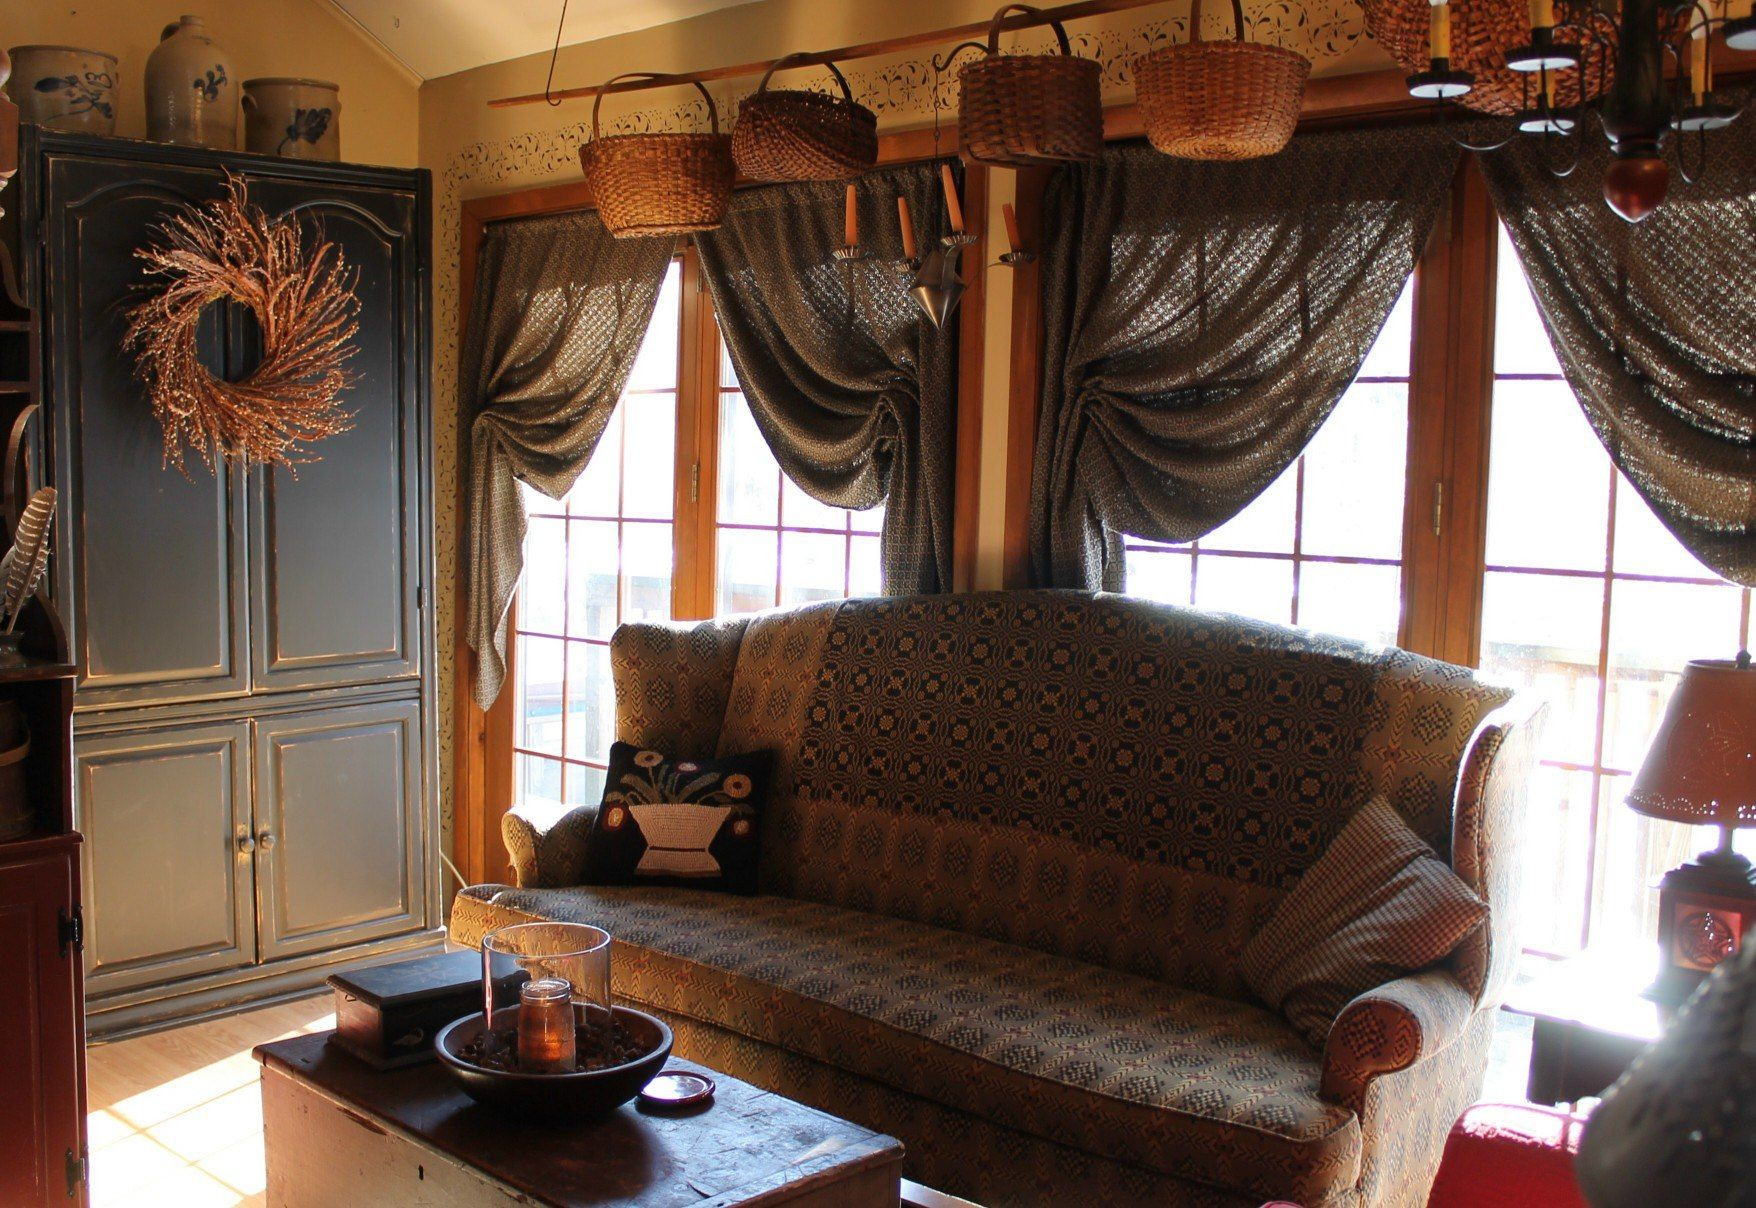 Primitive Curtains For Living Room
 Fantastic primitive decor Pinterest